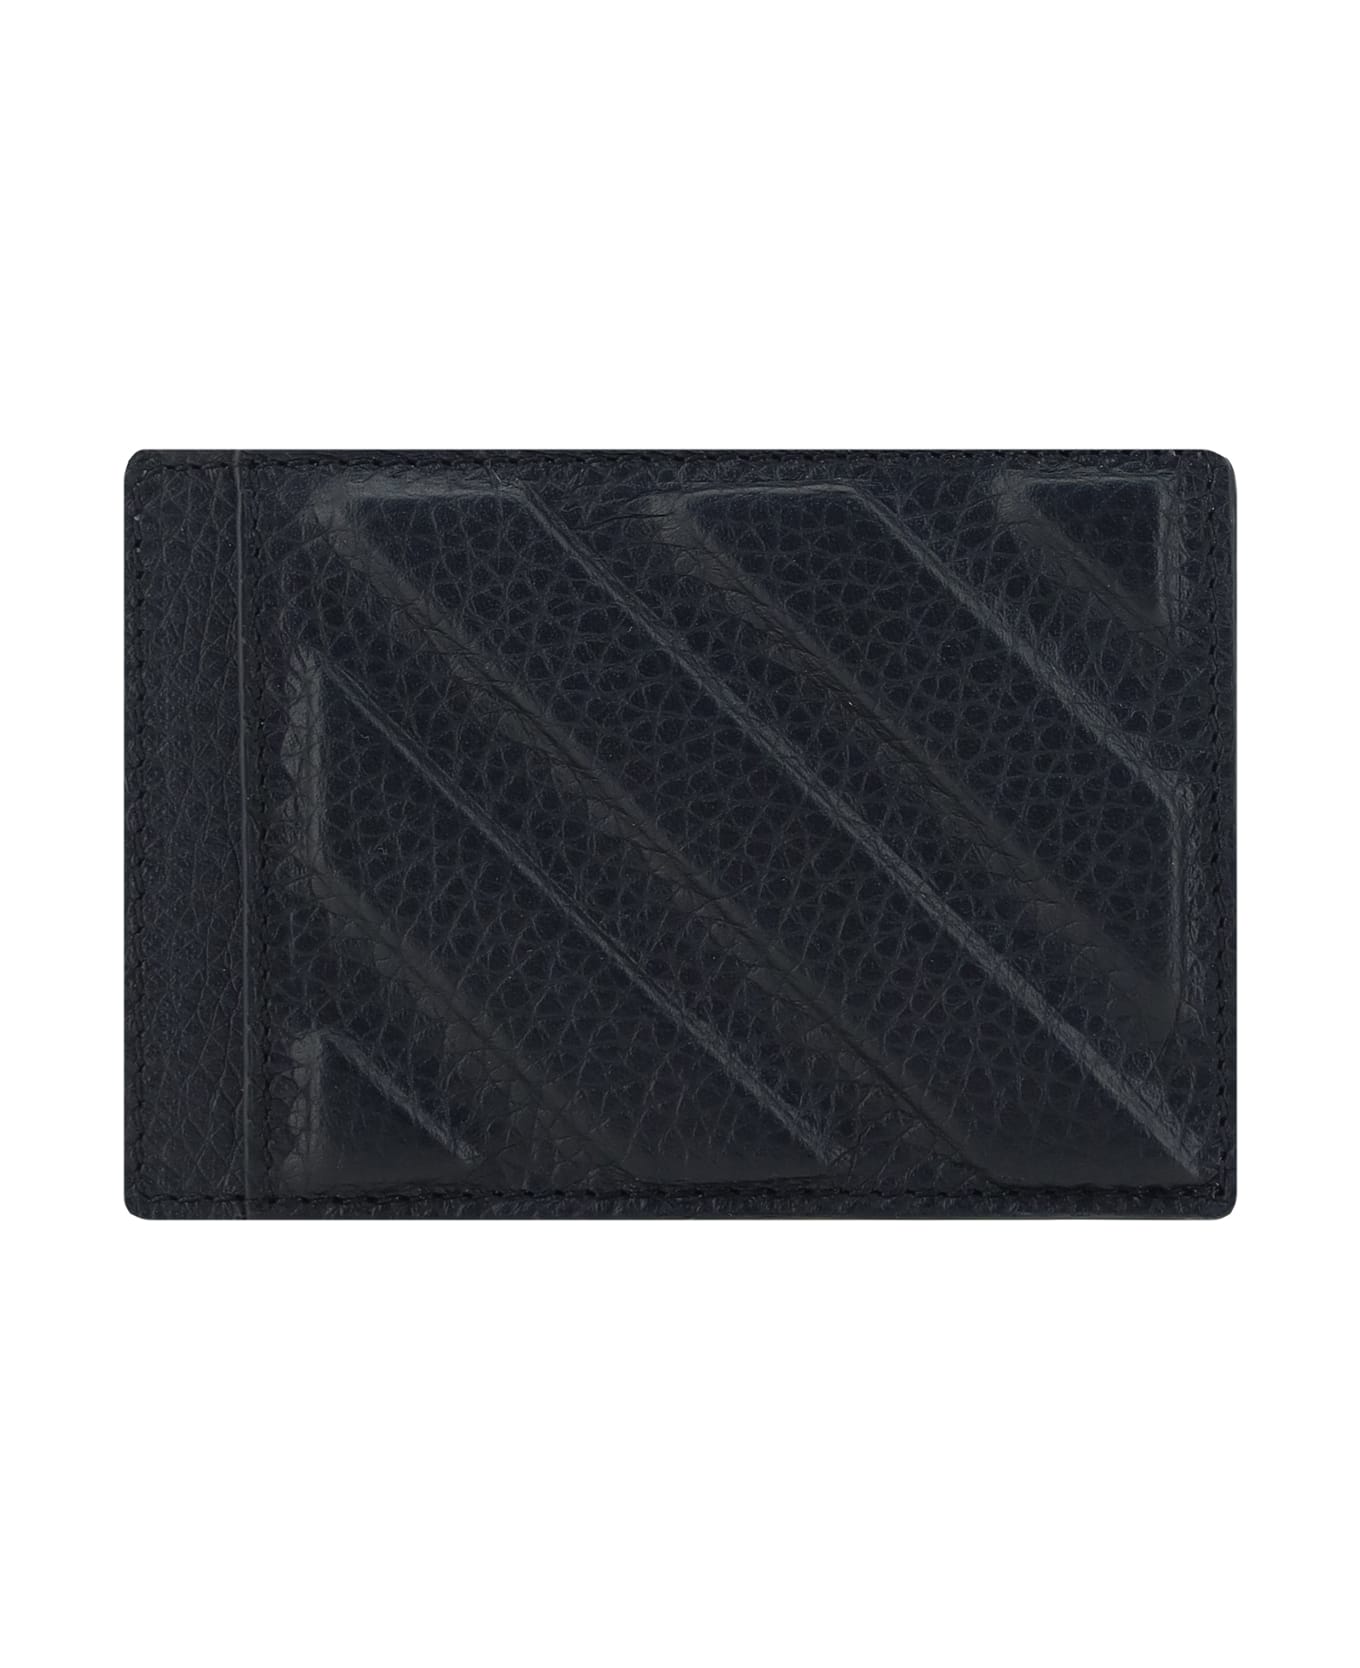 Off-White Leather Card Holder - Black